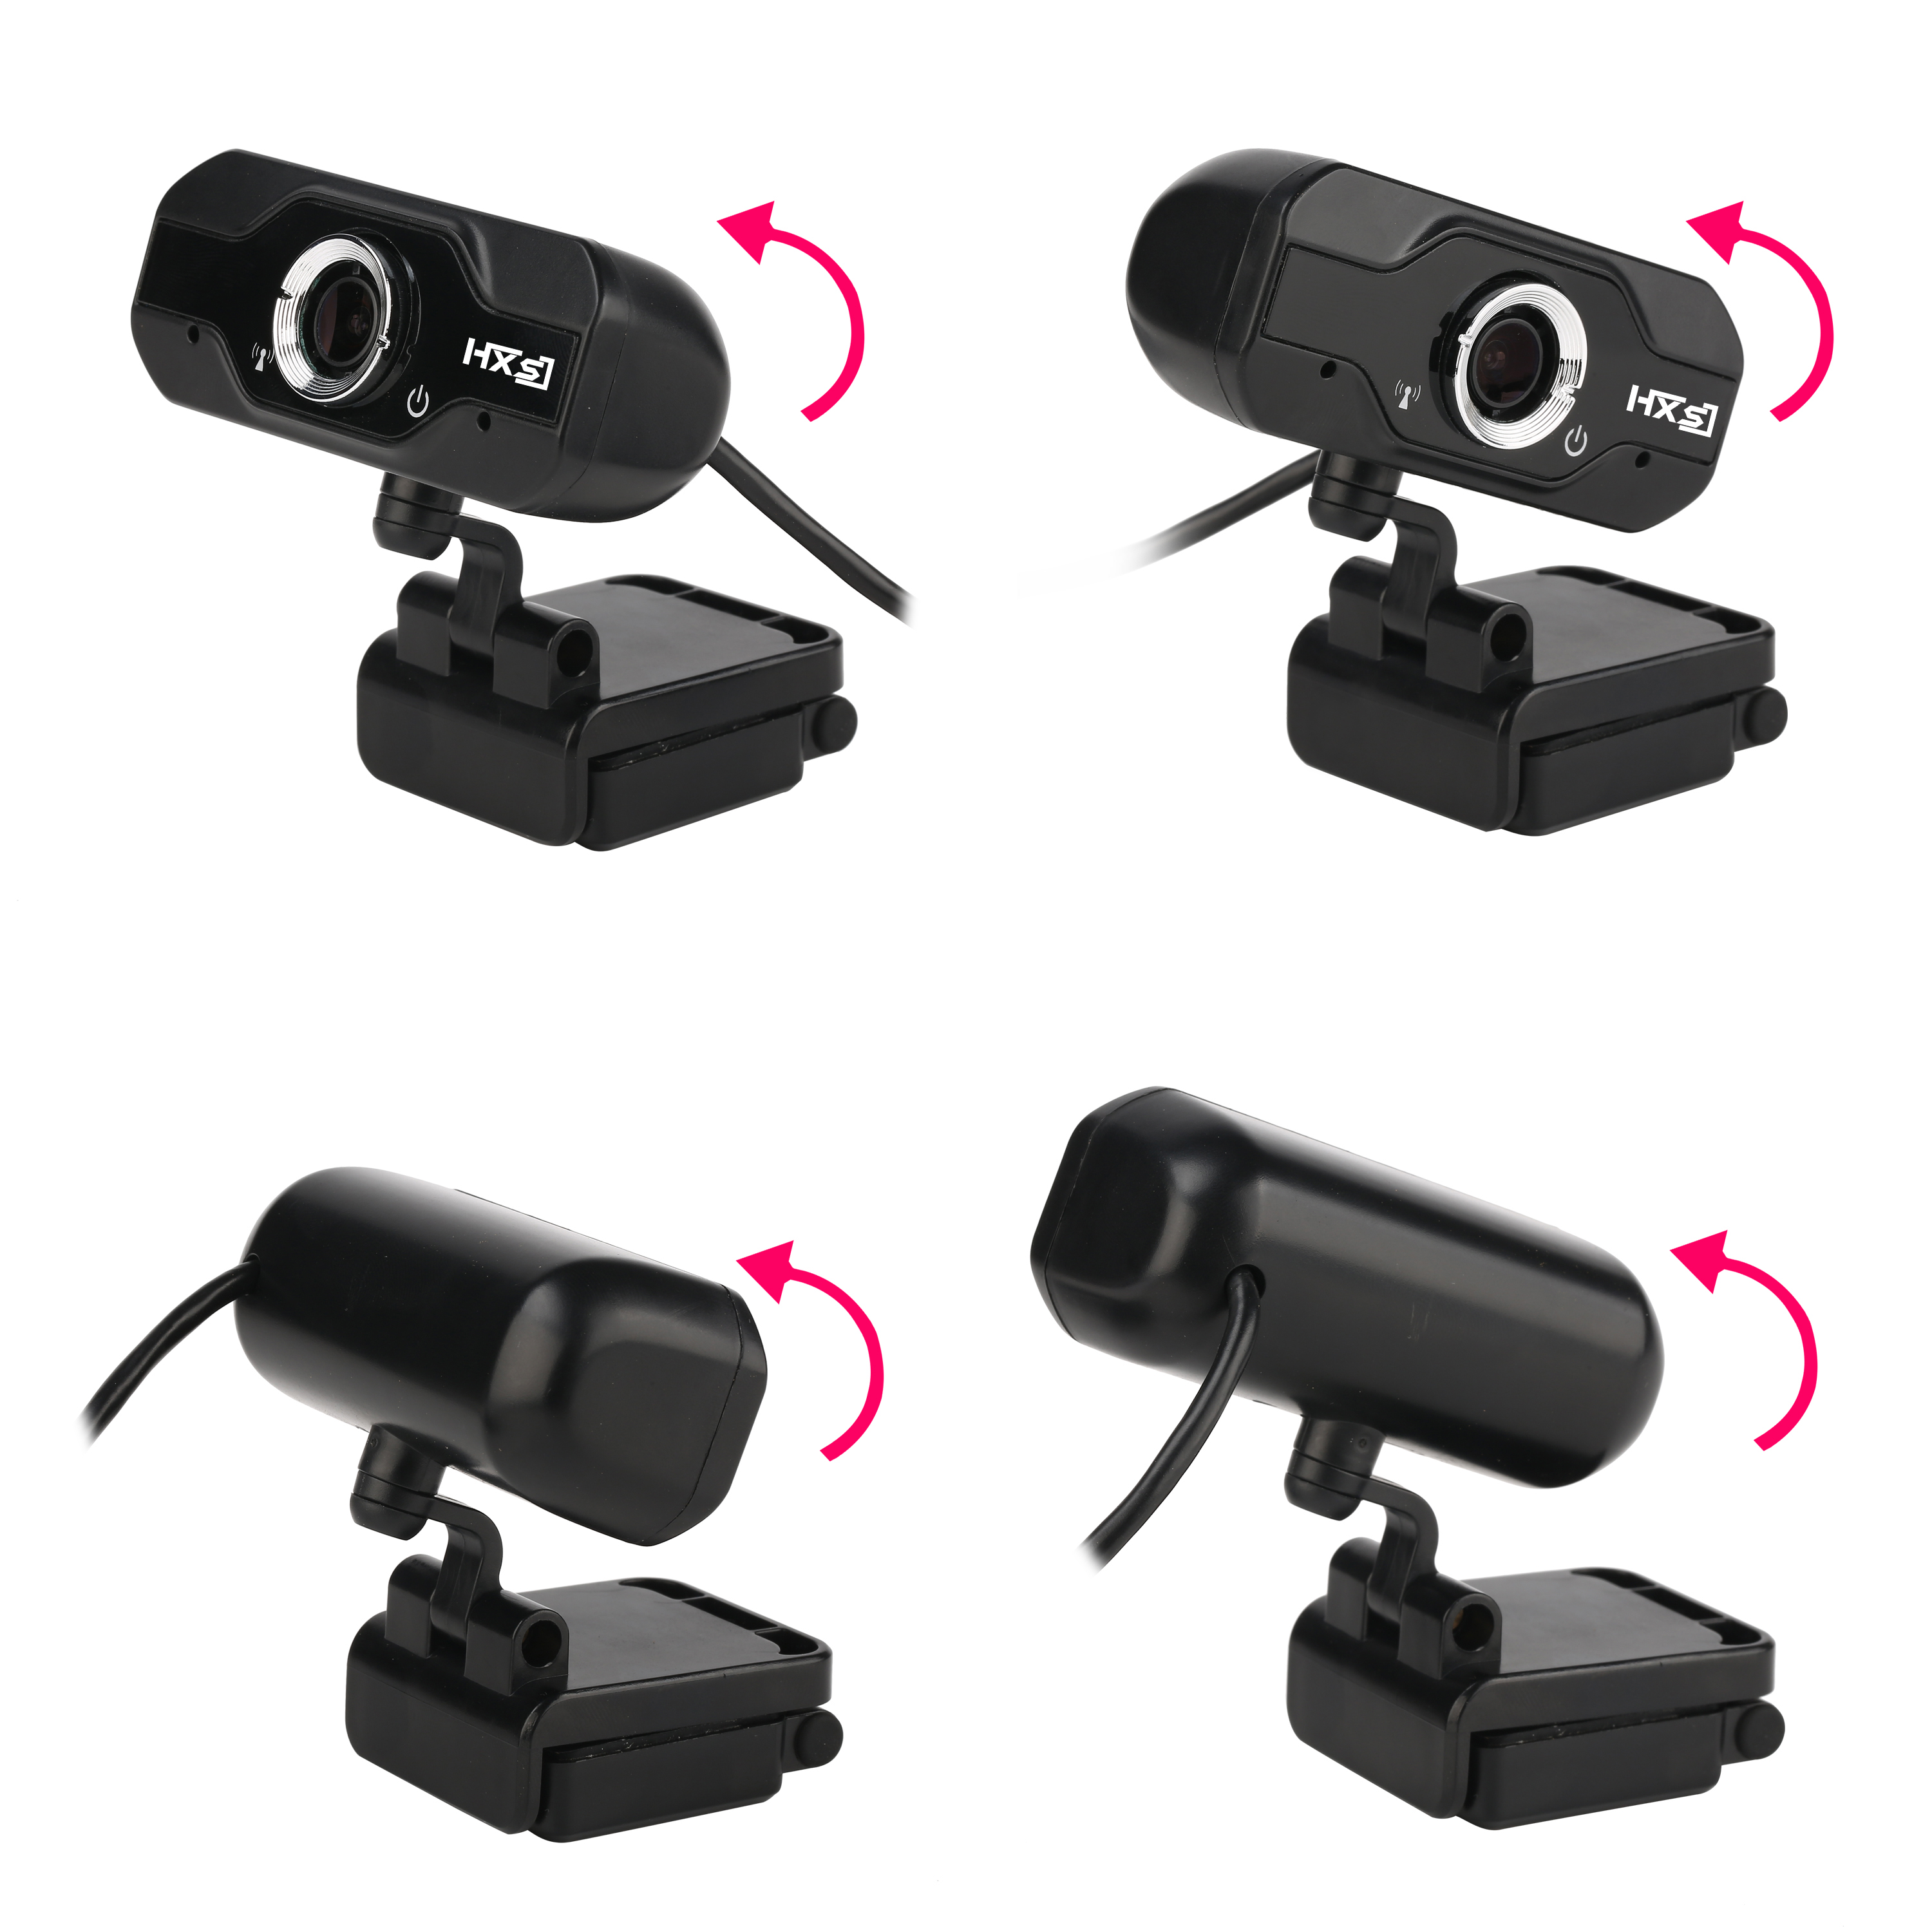 HXSJ HD 720P CMOS Sensor Webcam Built-in Microphone Adjustable Angle for Laptop Desktop 30